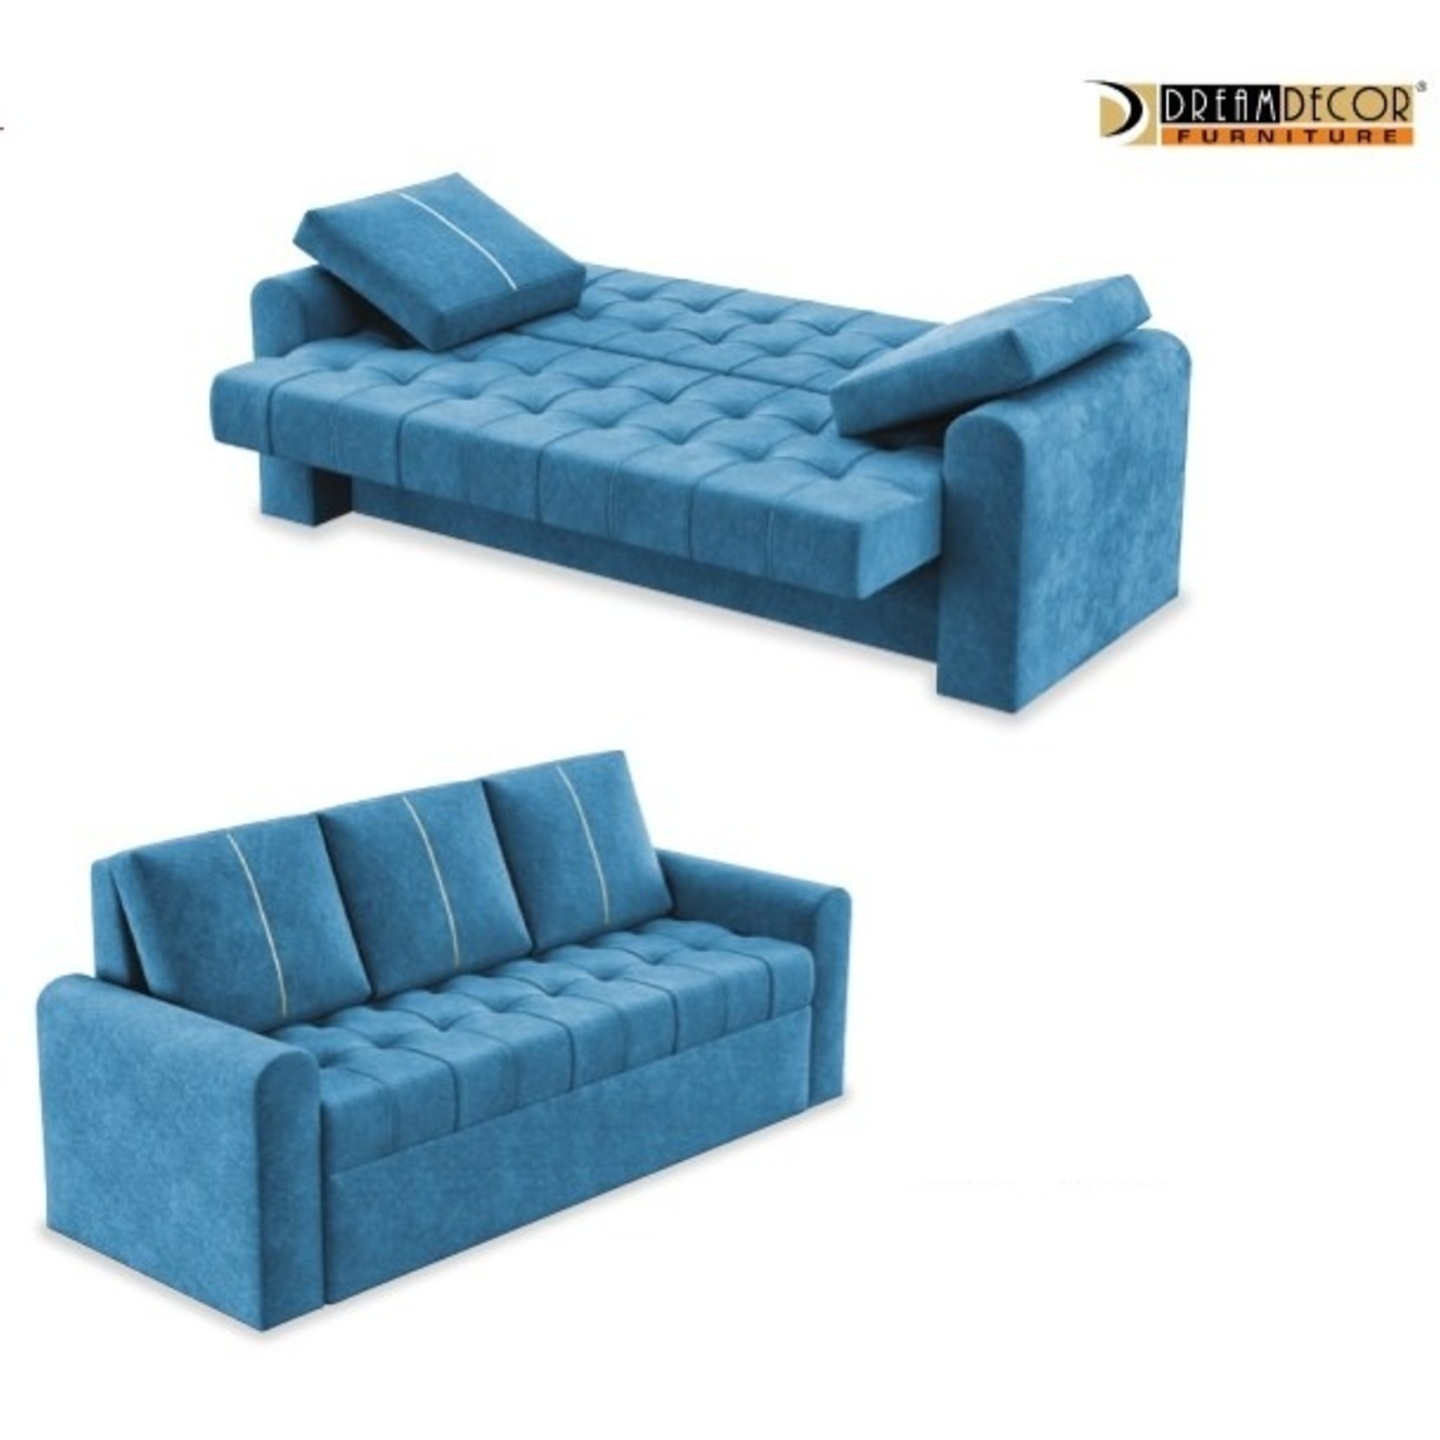 DDF Sofa Cam Bed -04 In Blue Colour